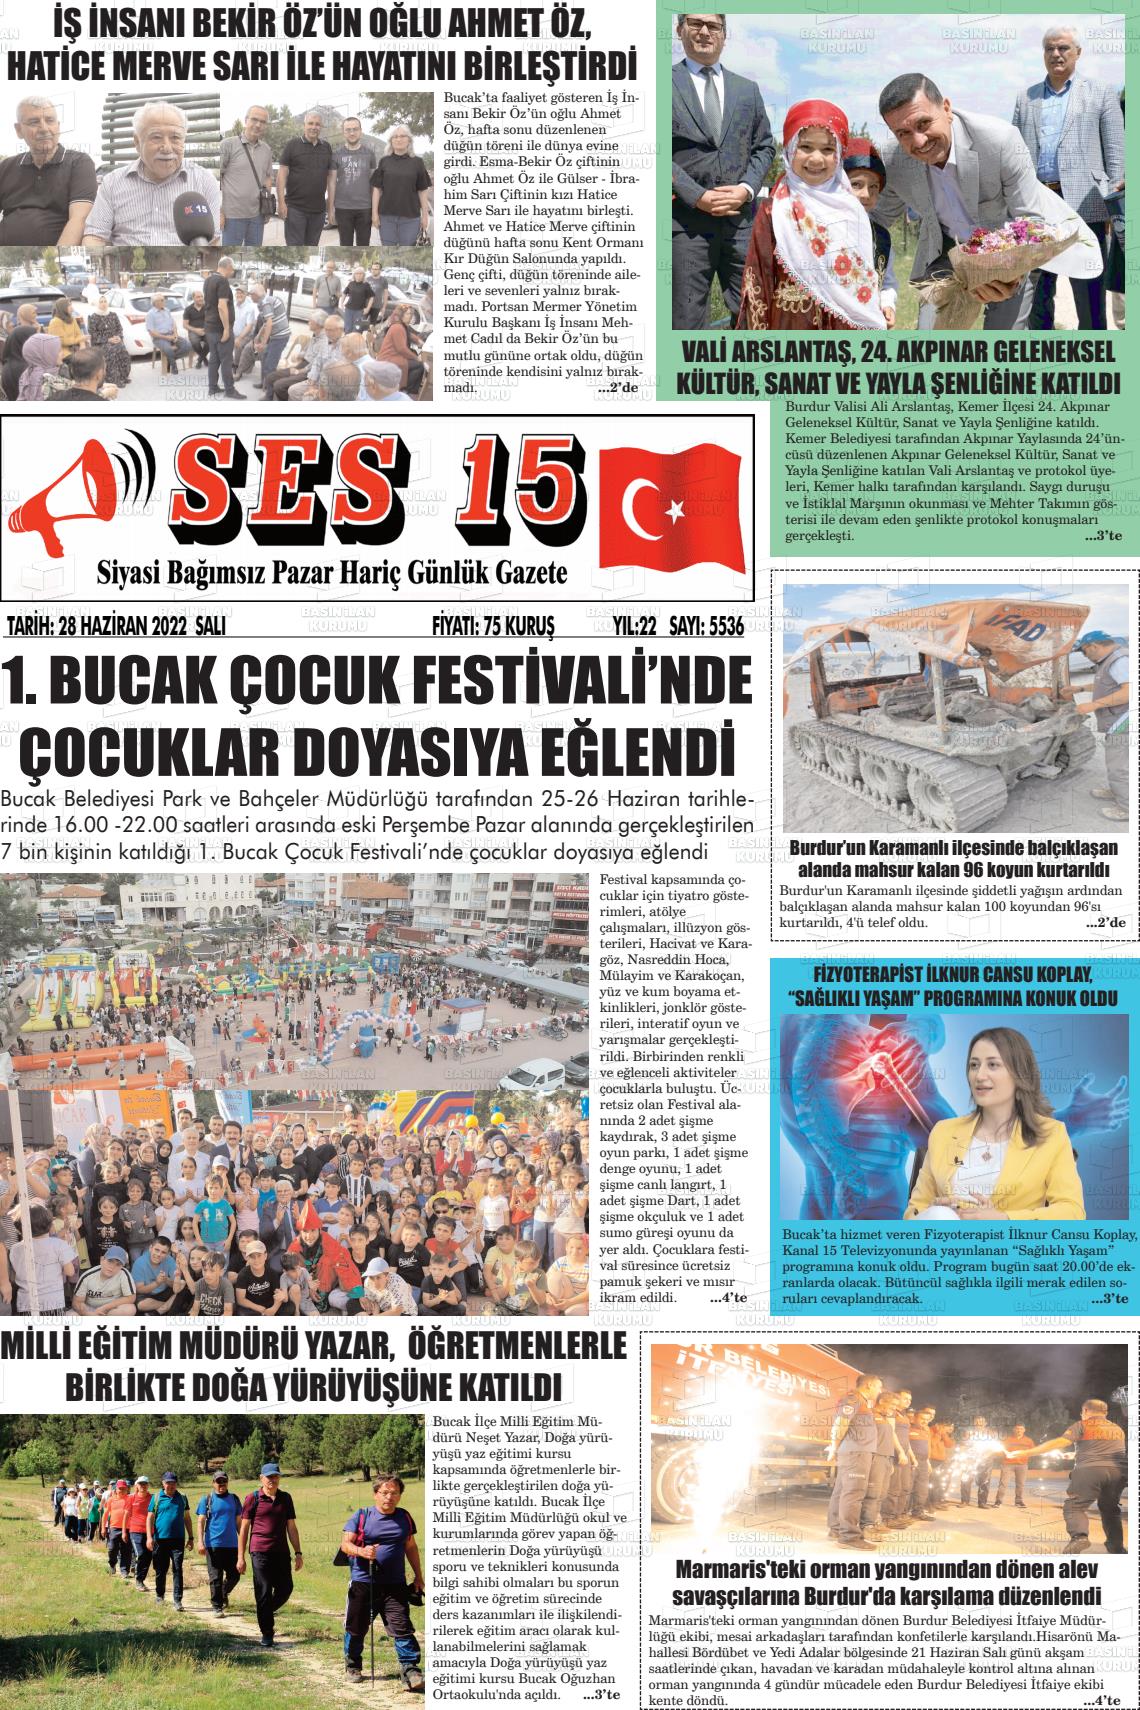 28 Haziran 2022 Ses 15 Gazete Manşeti